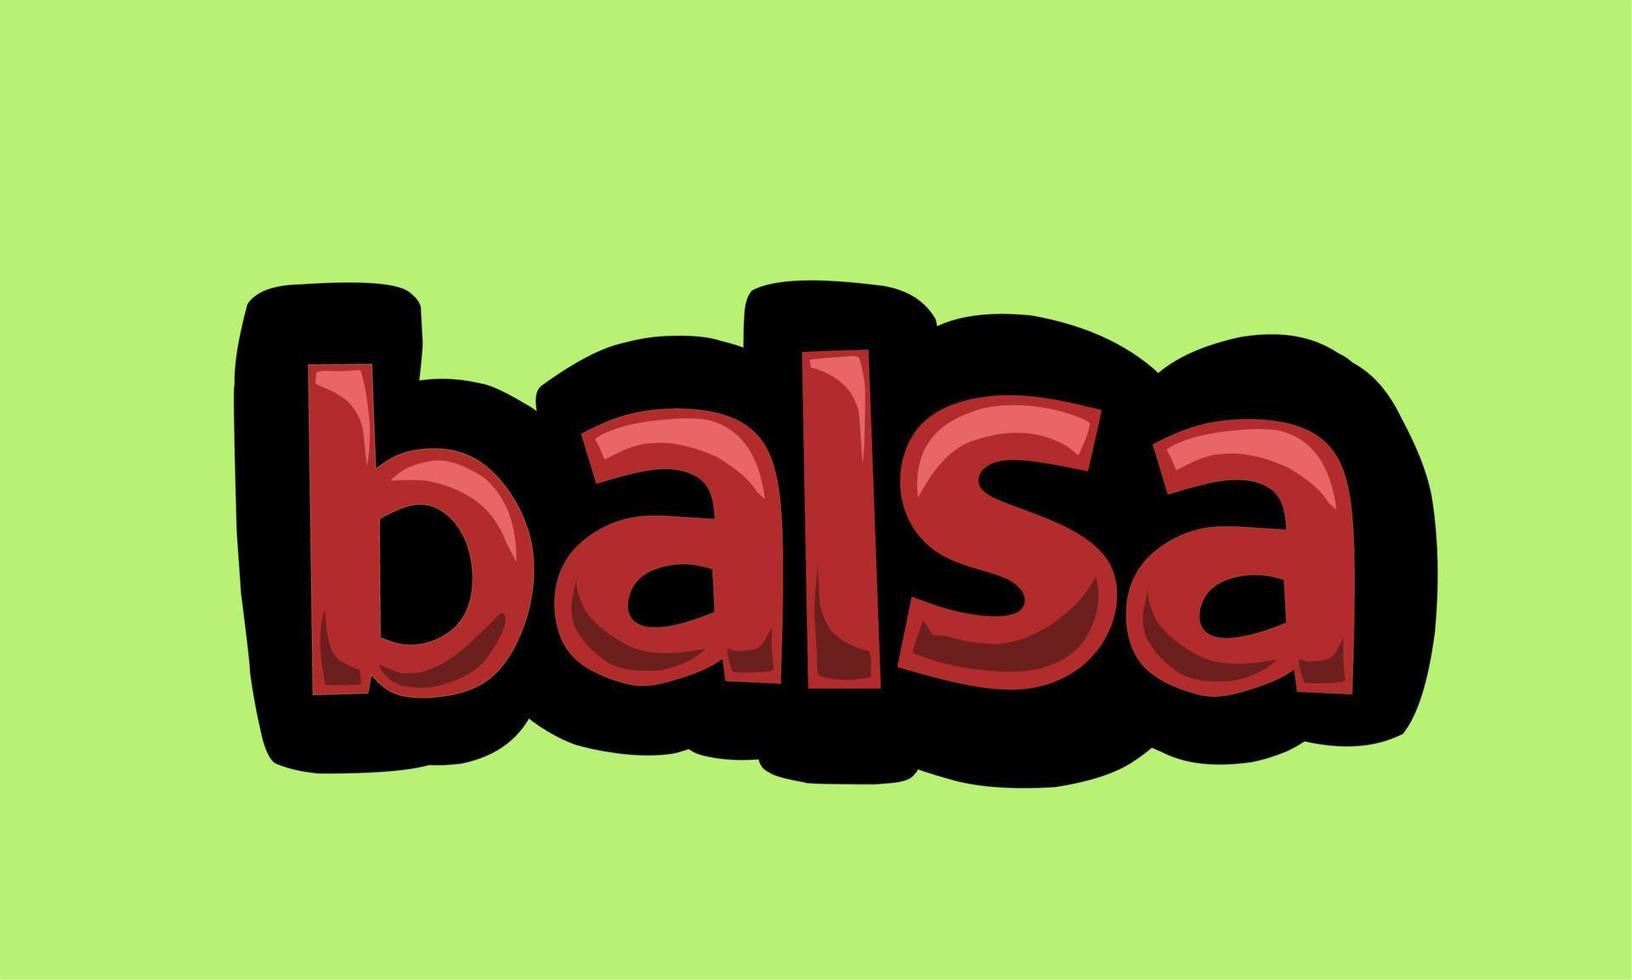 balsa writing vector design on a green background